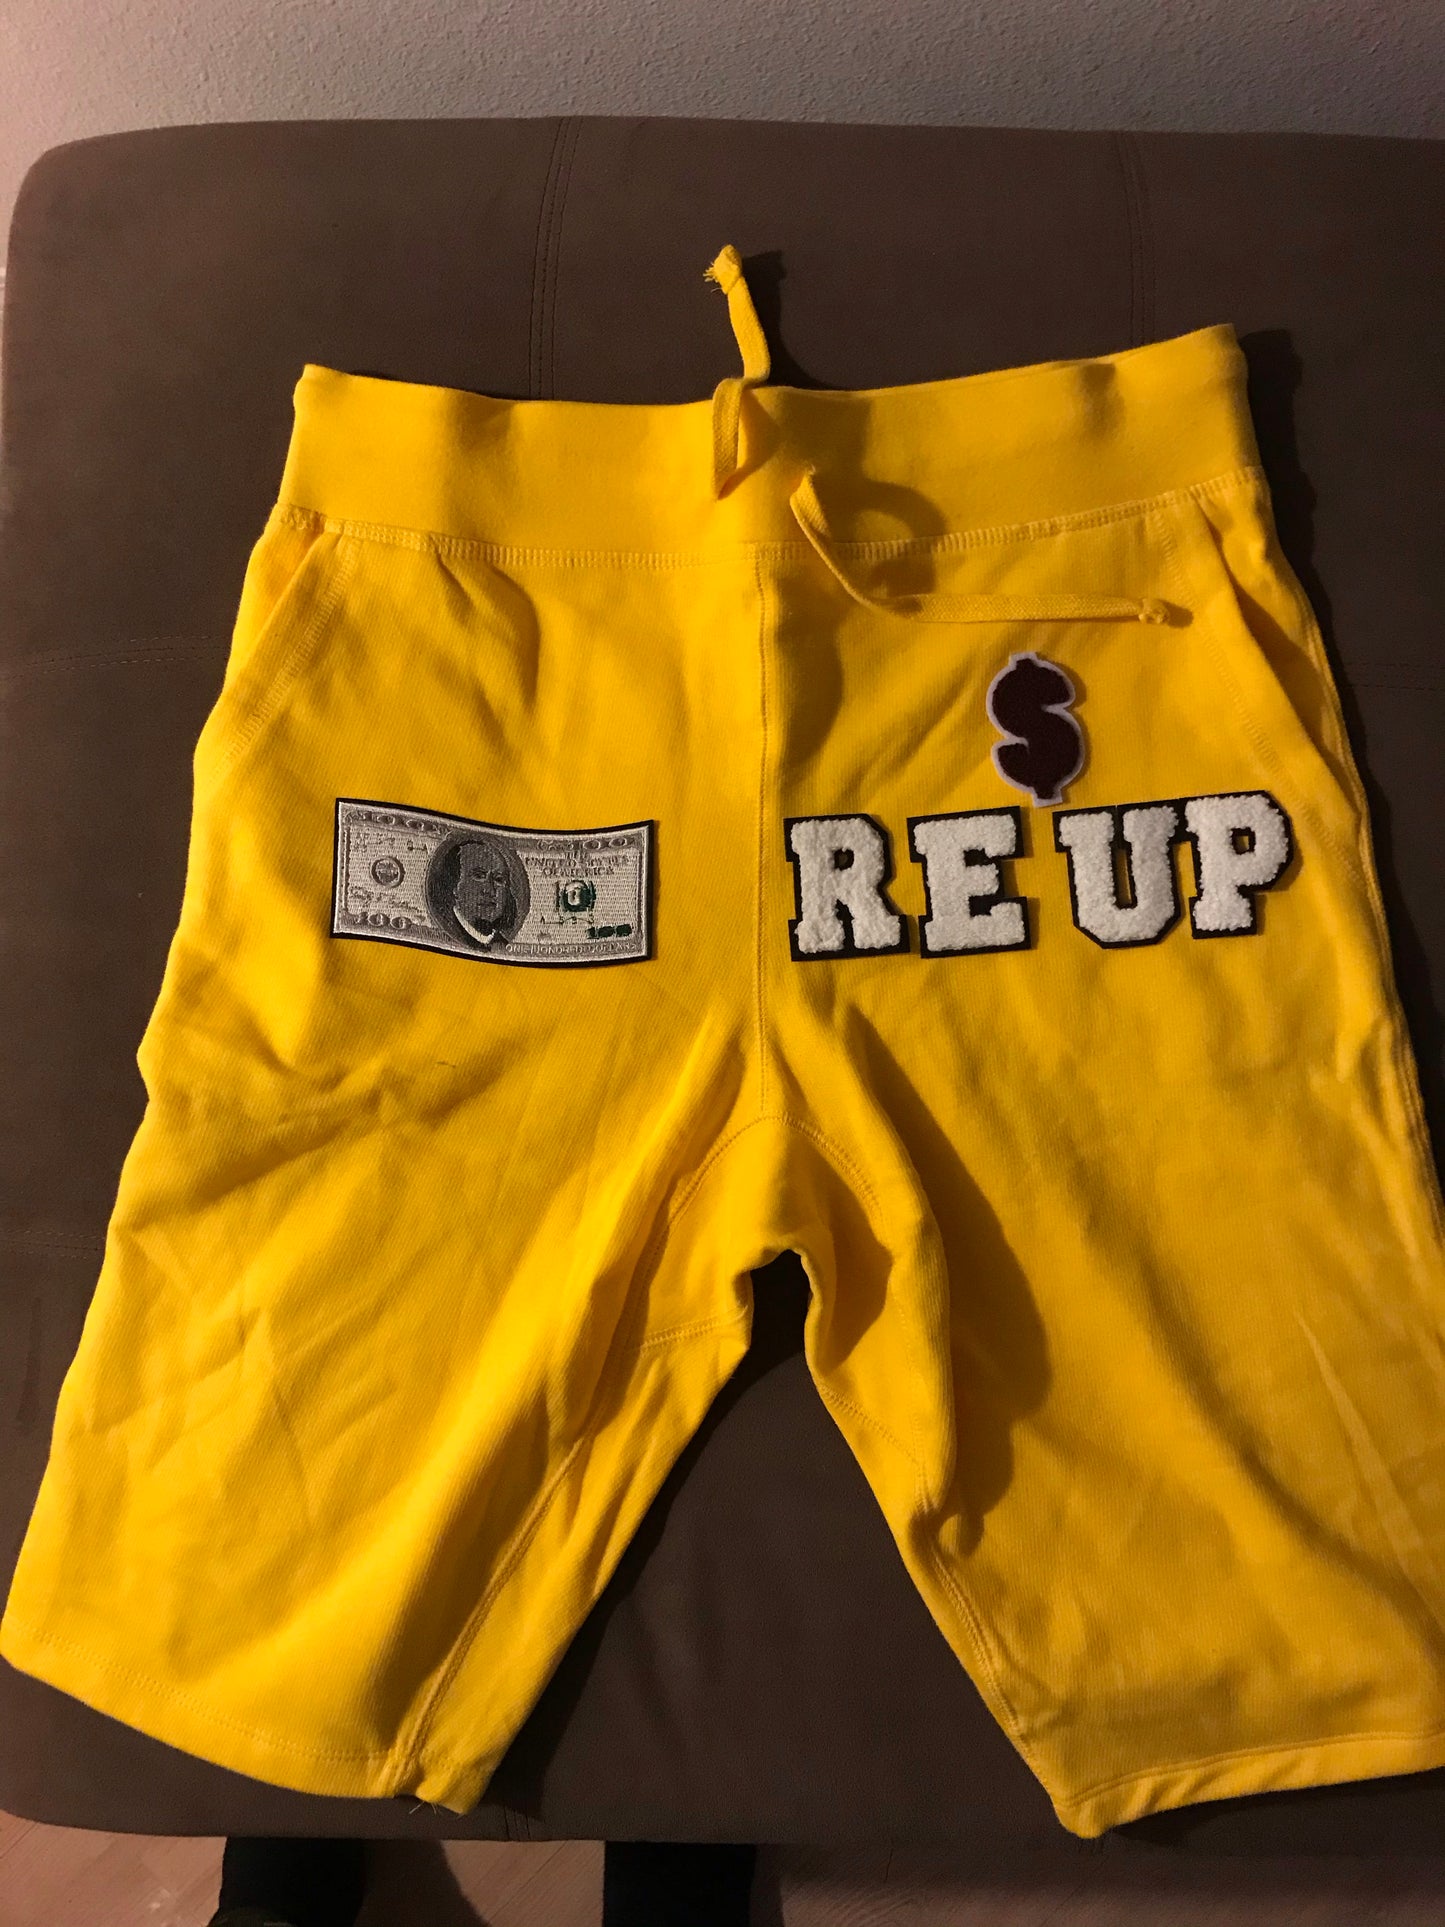 Yellow custom Re’up shorts